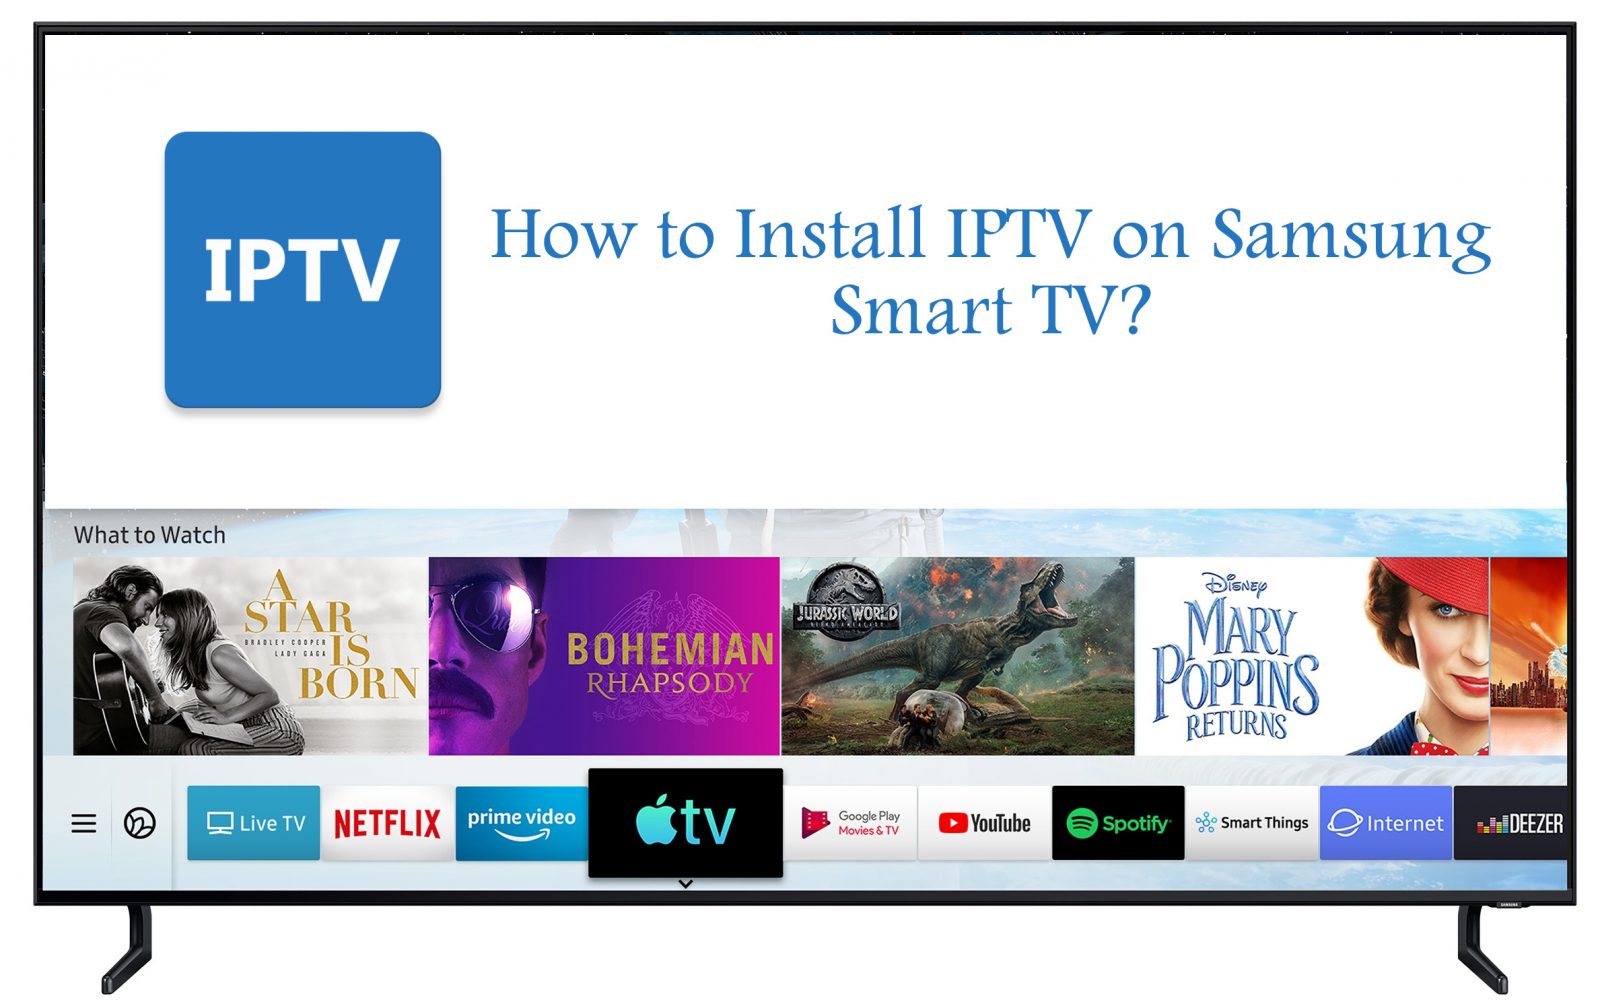 How to install IPTV on Samsung Smart TV?